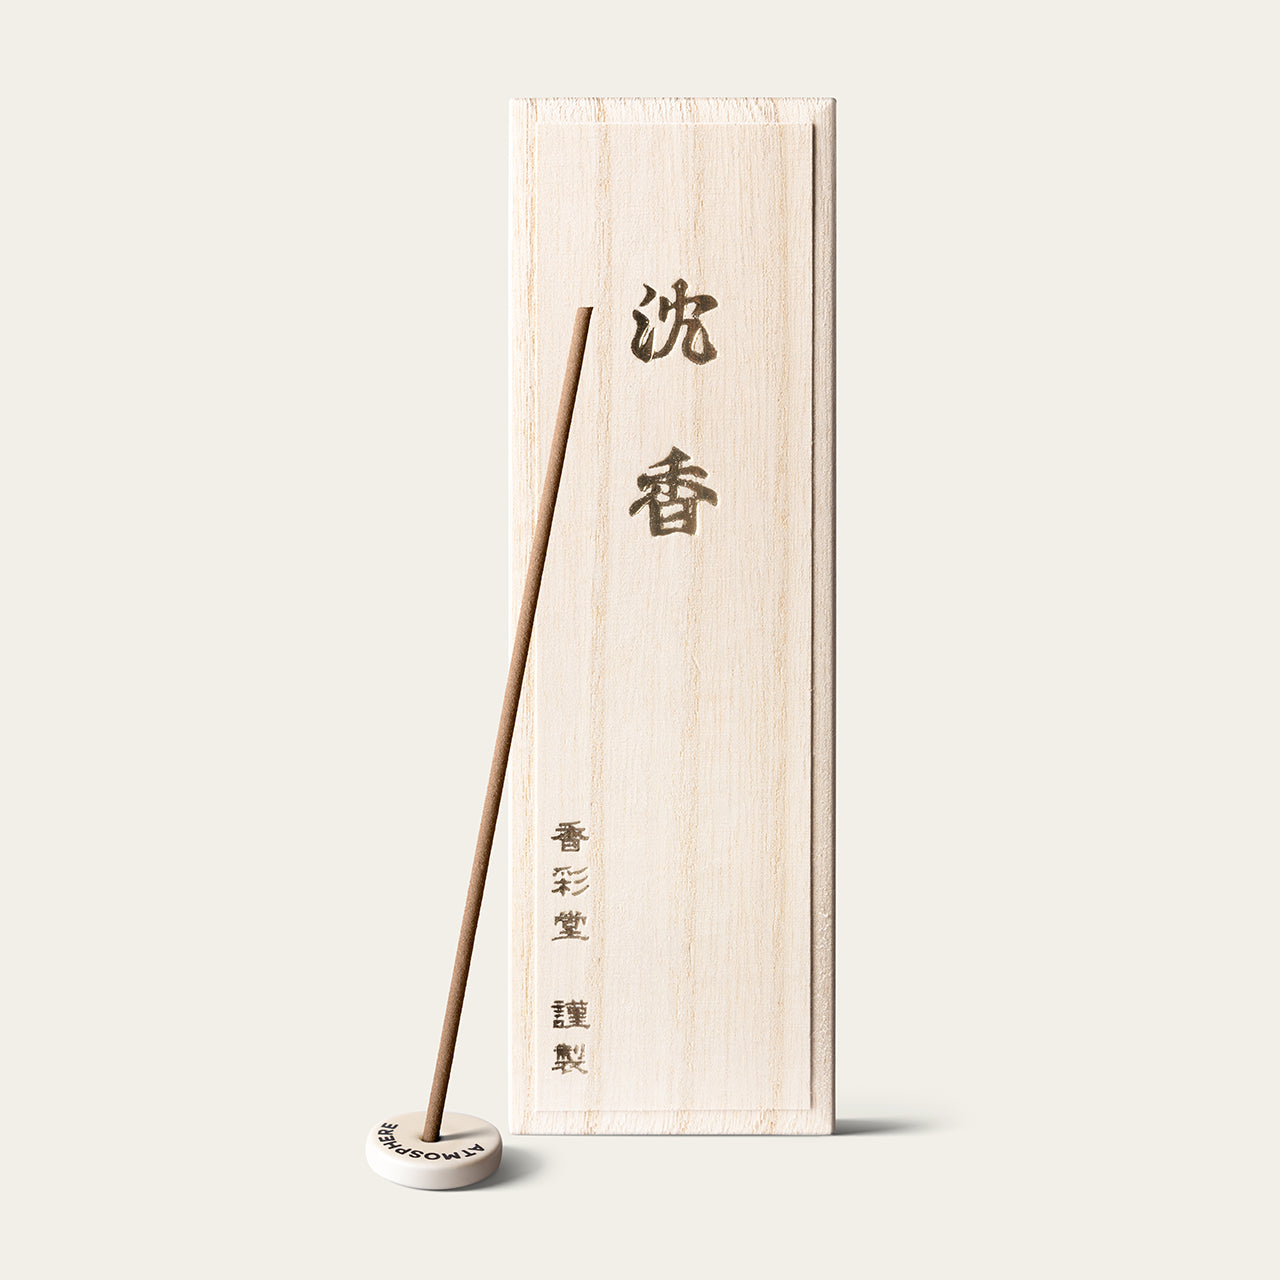 Kousaido Premium Agarwood Supreme Japanese incense sticks (150 sticks) with Atmosphere ceramic incense holder